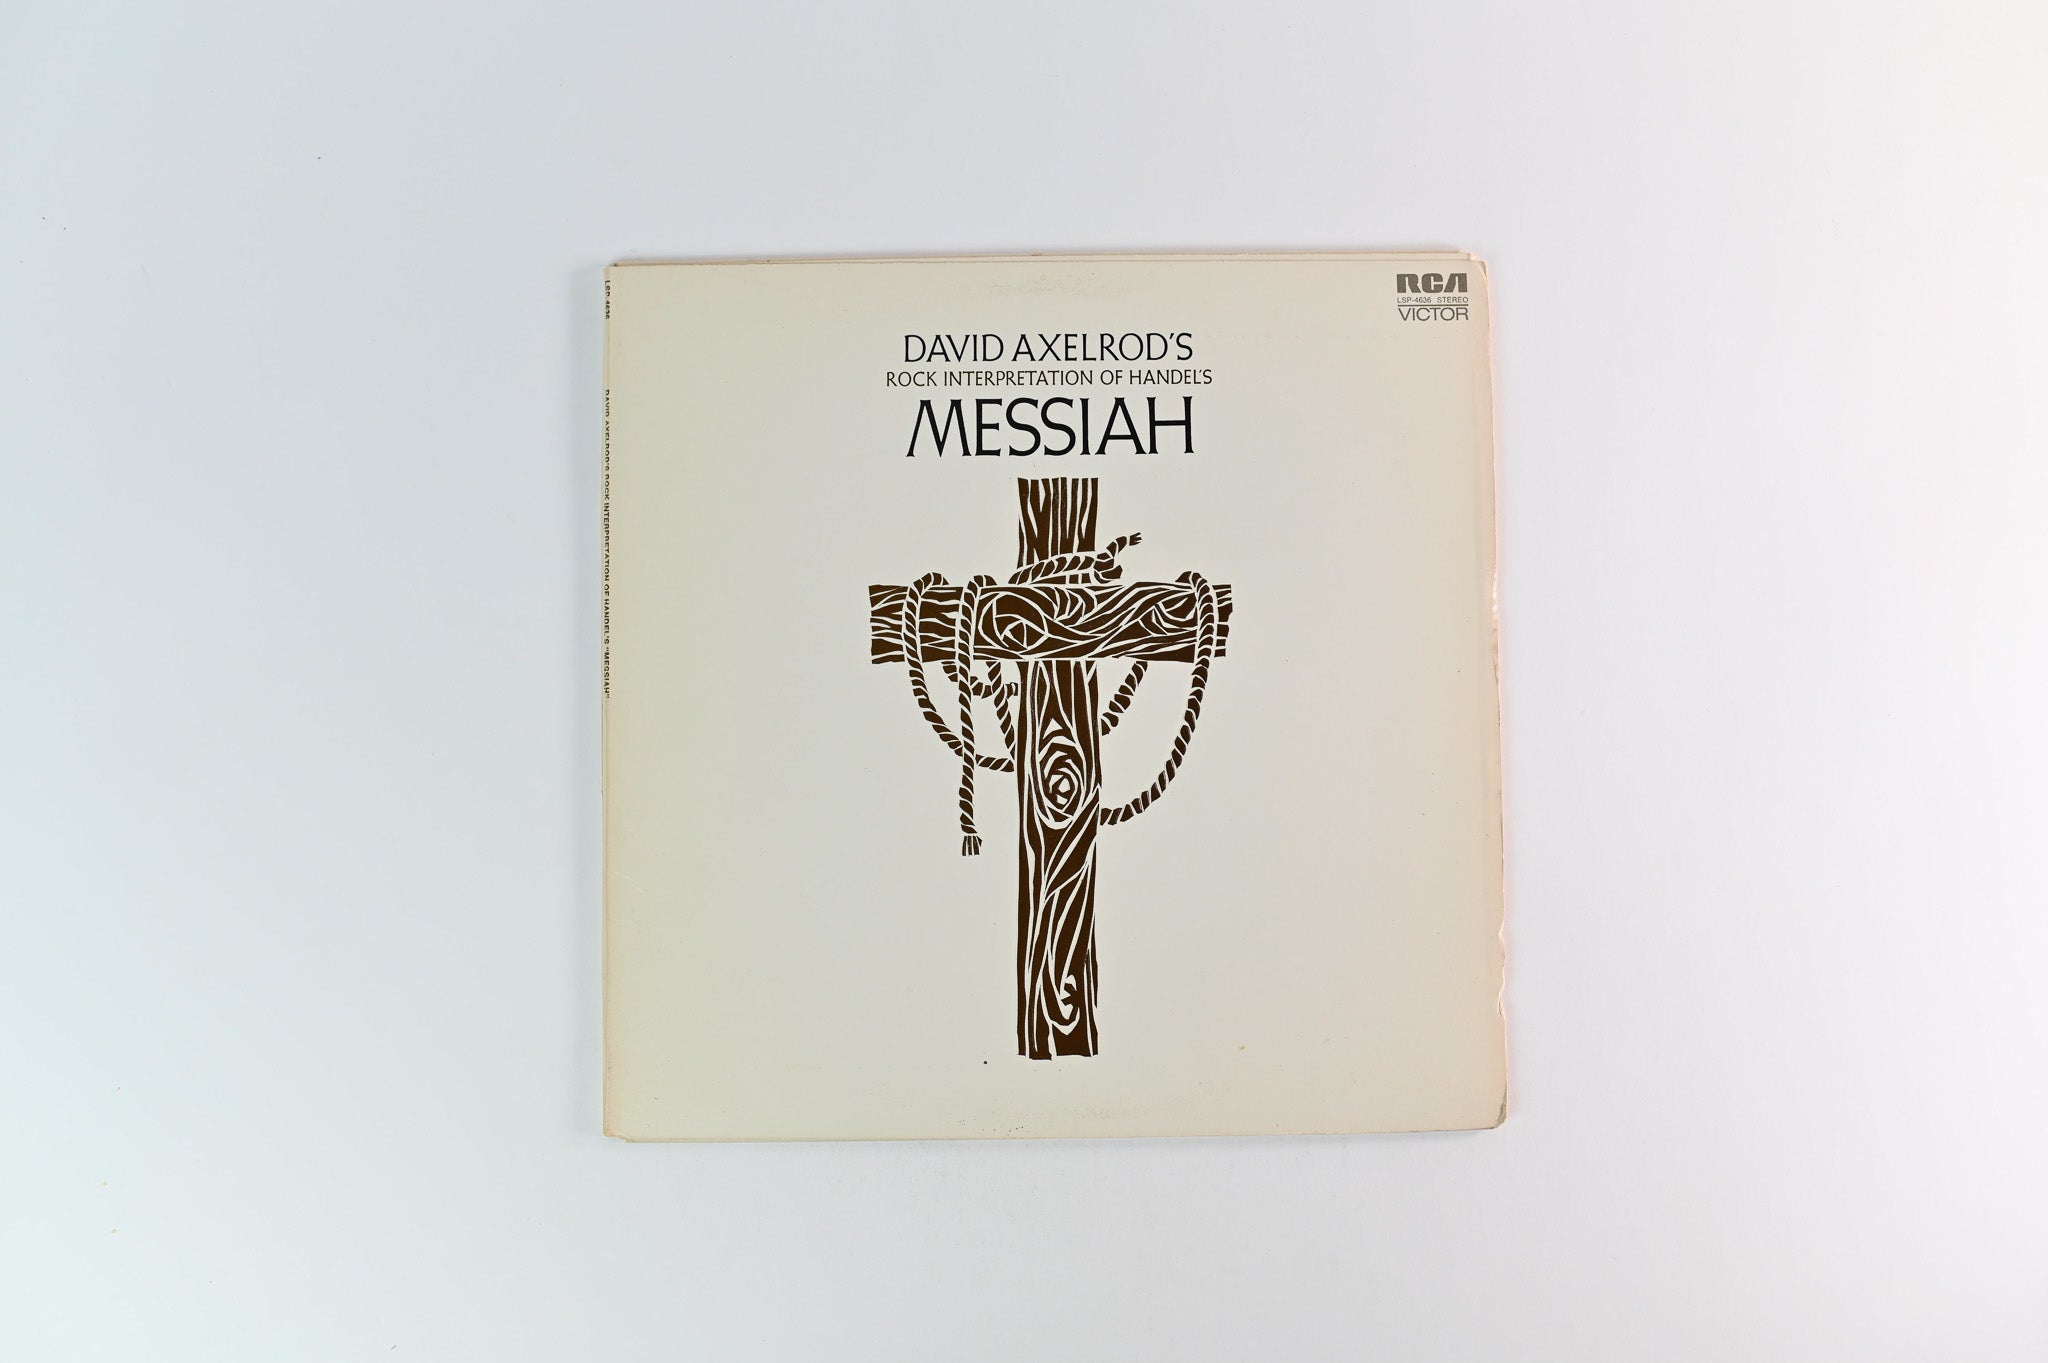 David Axelrod - David Axelrod's Rock Interpretation Of Handel's Messiah on RCA